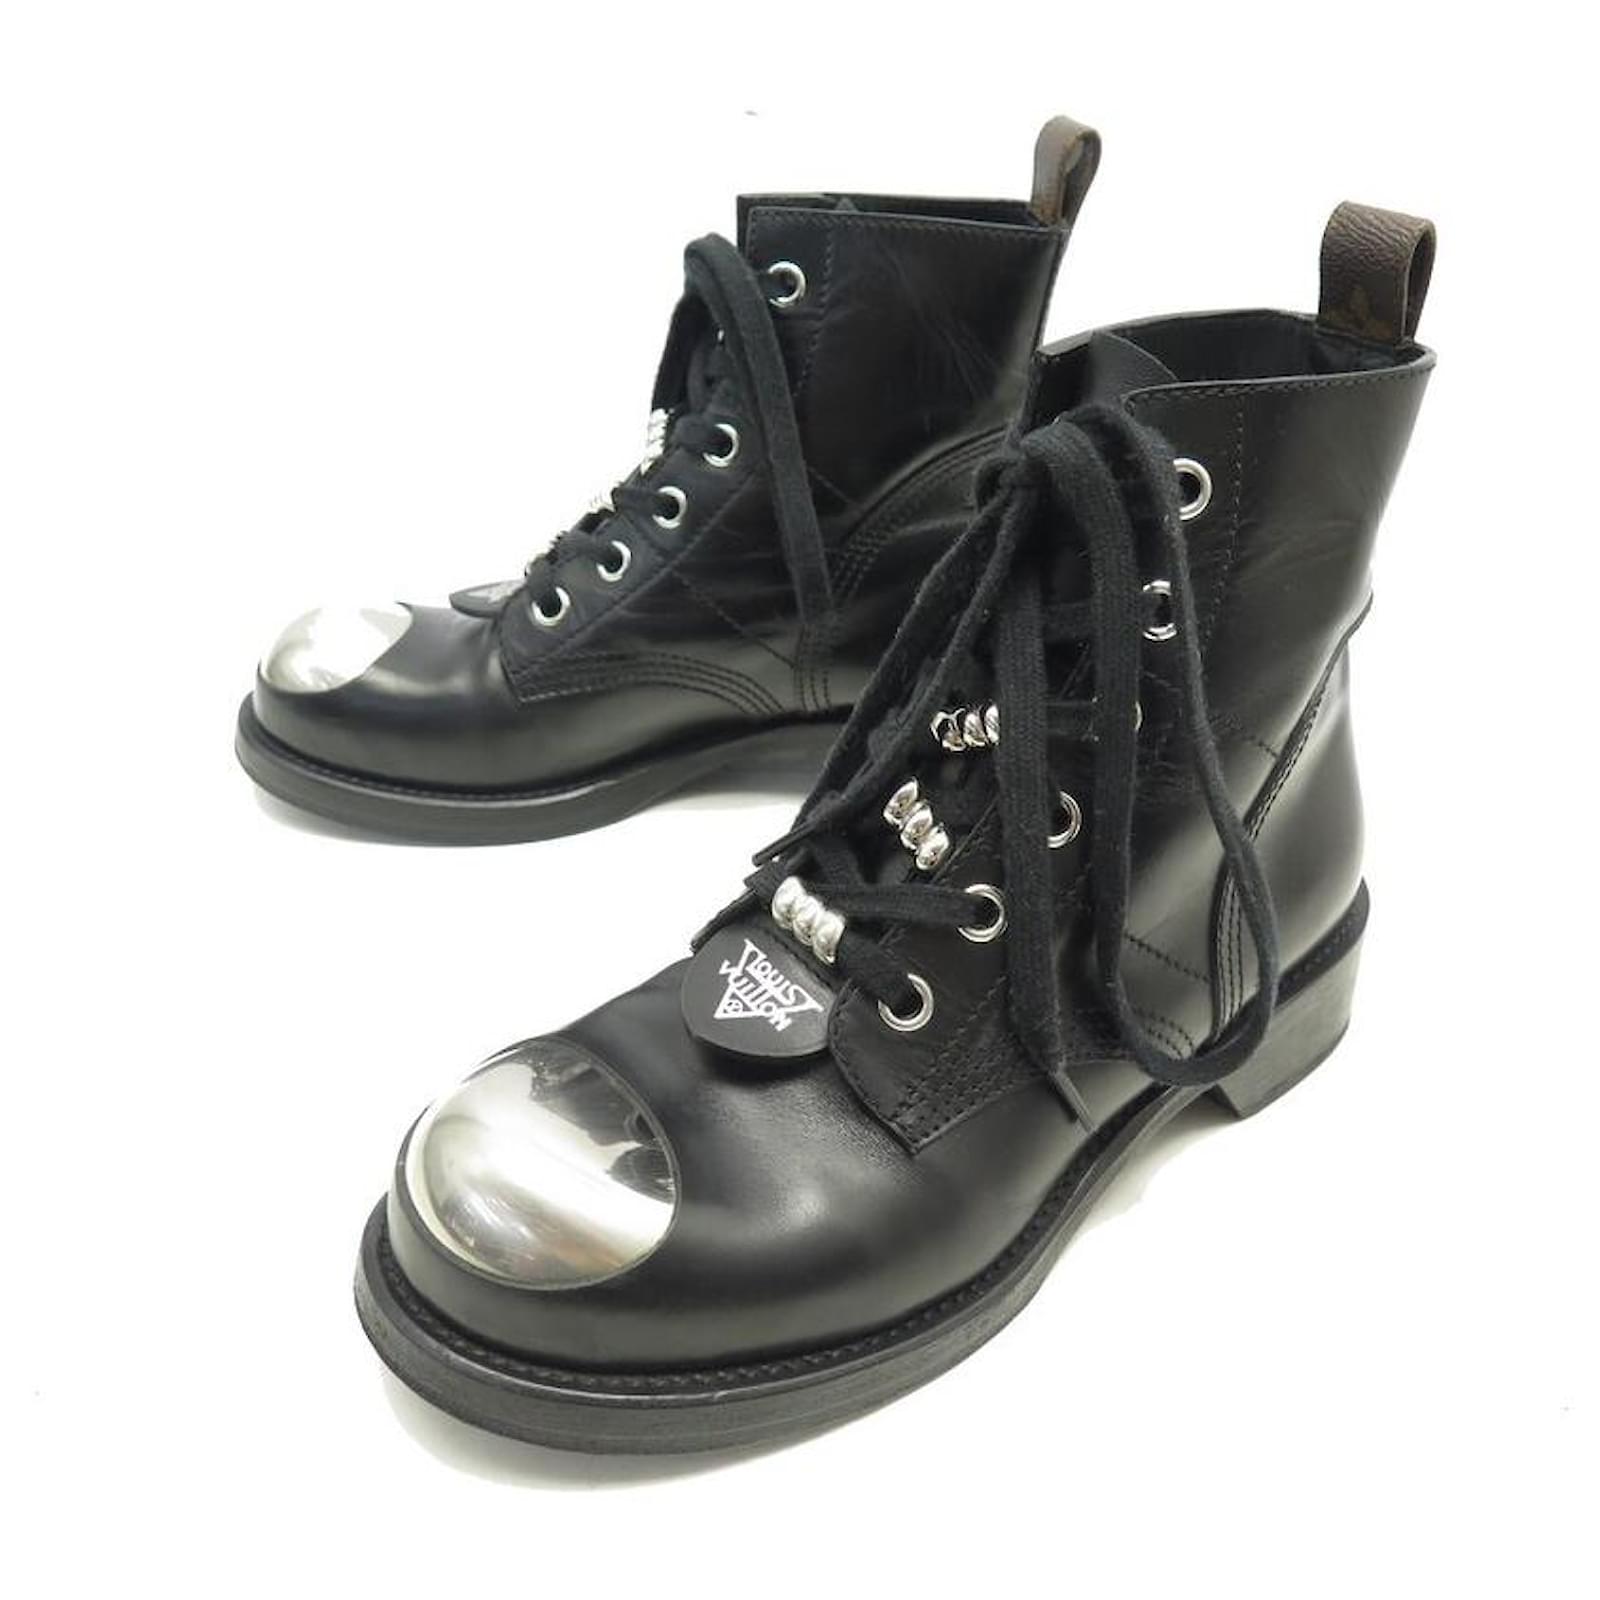 Louis Vuitton - Authenticated Metropolis Ankle Boots - Leather Black for Women, Good Condition